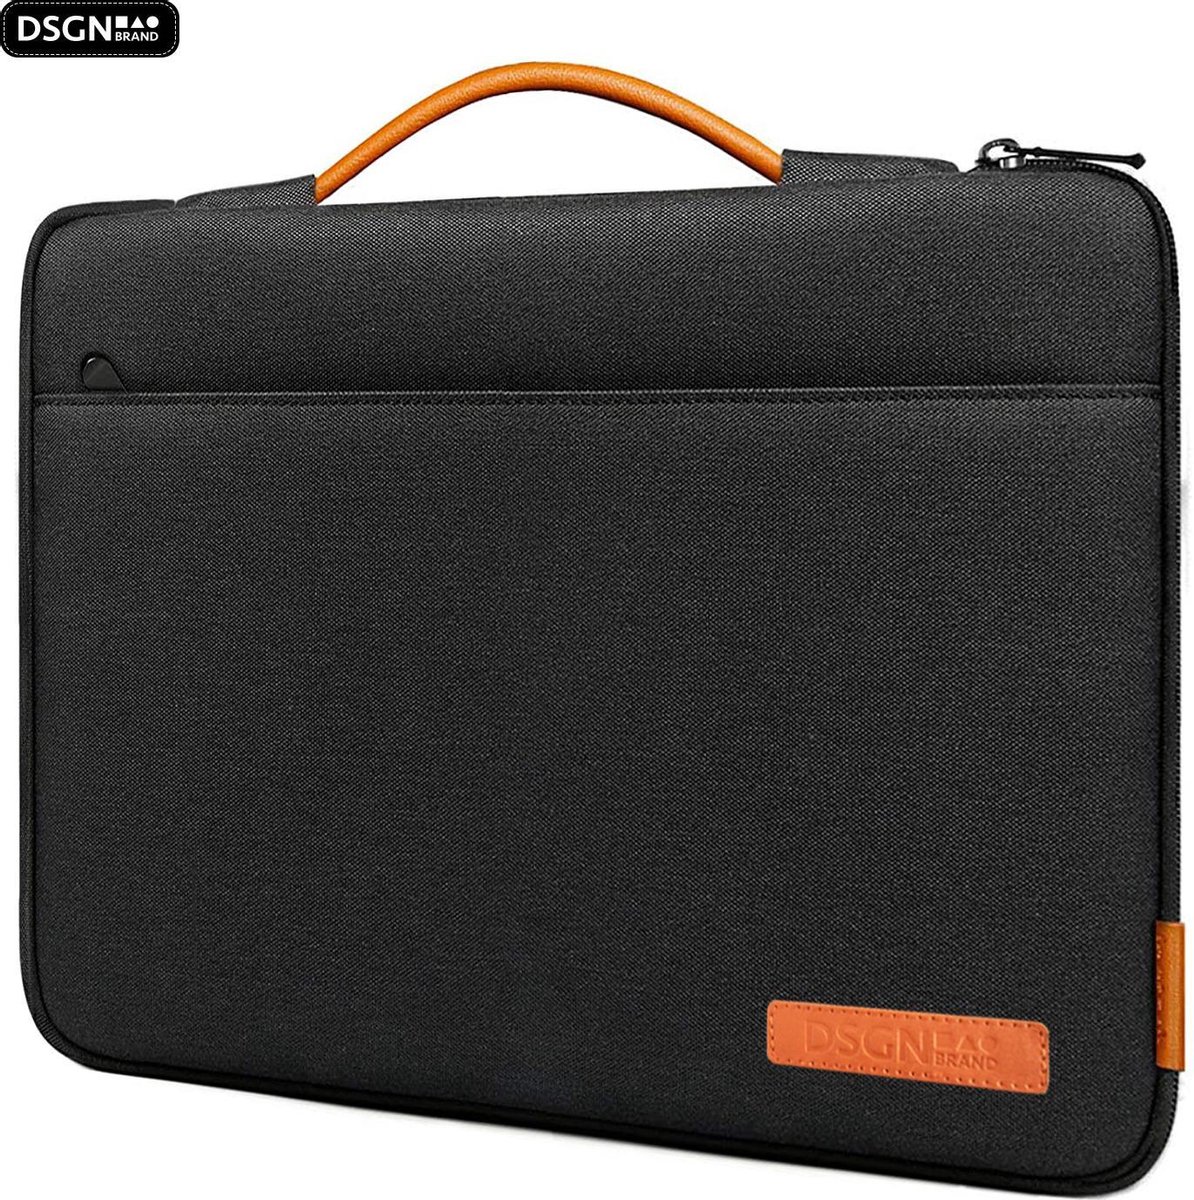 DSGN FOAM - Laptophoes 14 inch - Laptoptas - Notebook - Chromebook - Laptop Sleeve Hoes Case - Handvat - Waterdicht - Extra Vak - Zwart